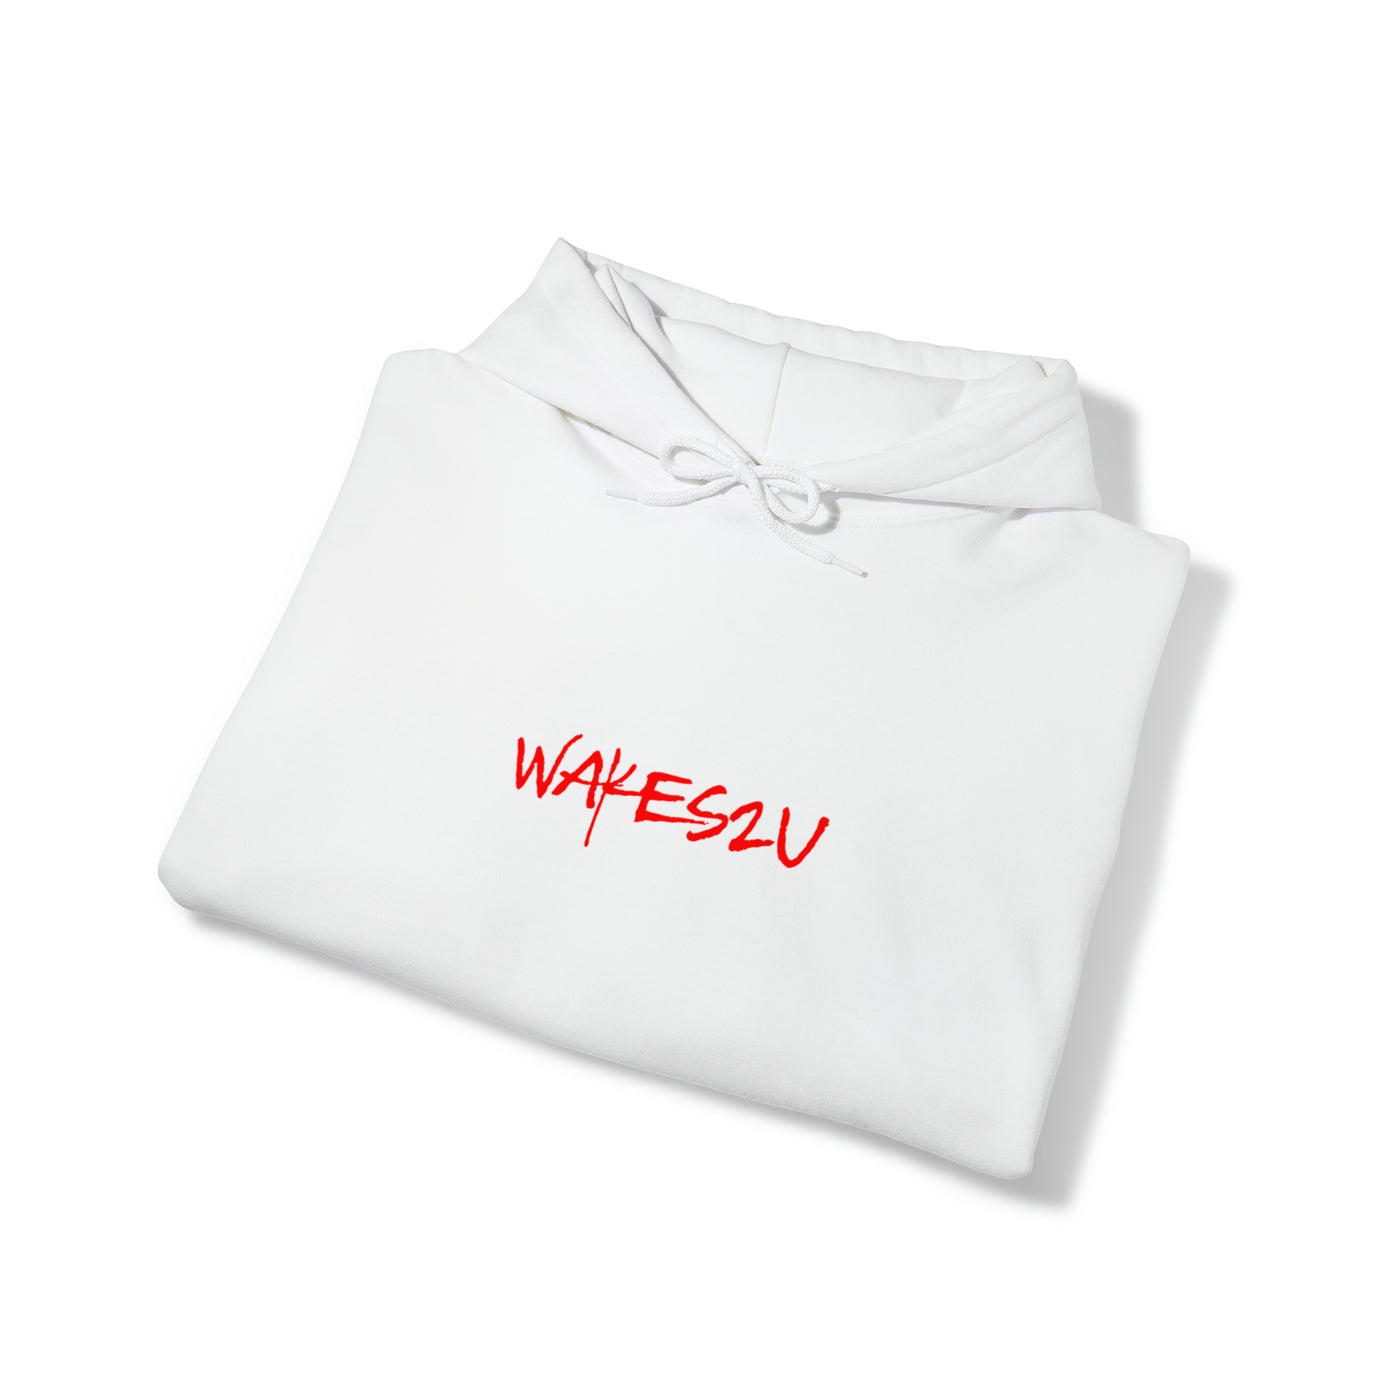 WAKES2U "AN EXPENSIVE HABIT" Hooded Sweatshirt